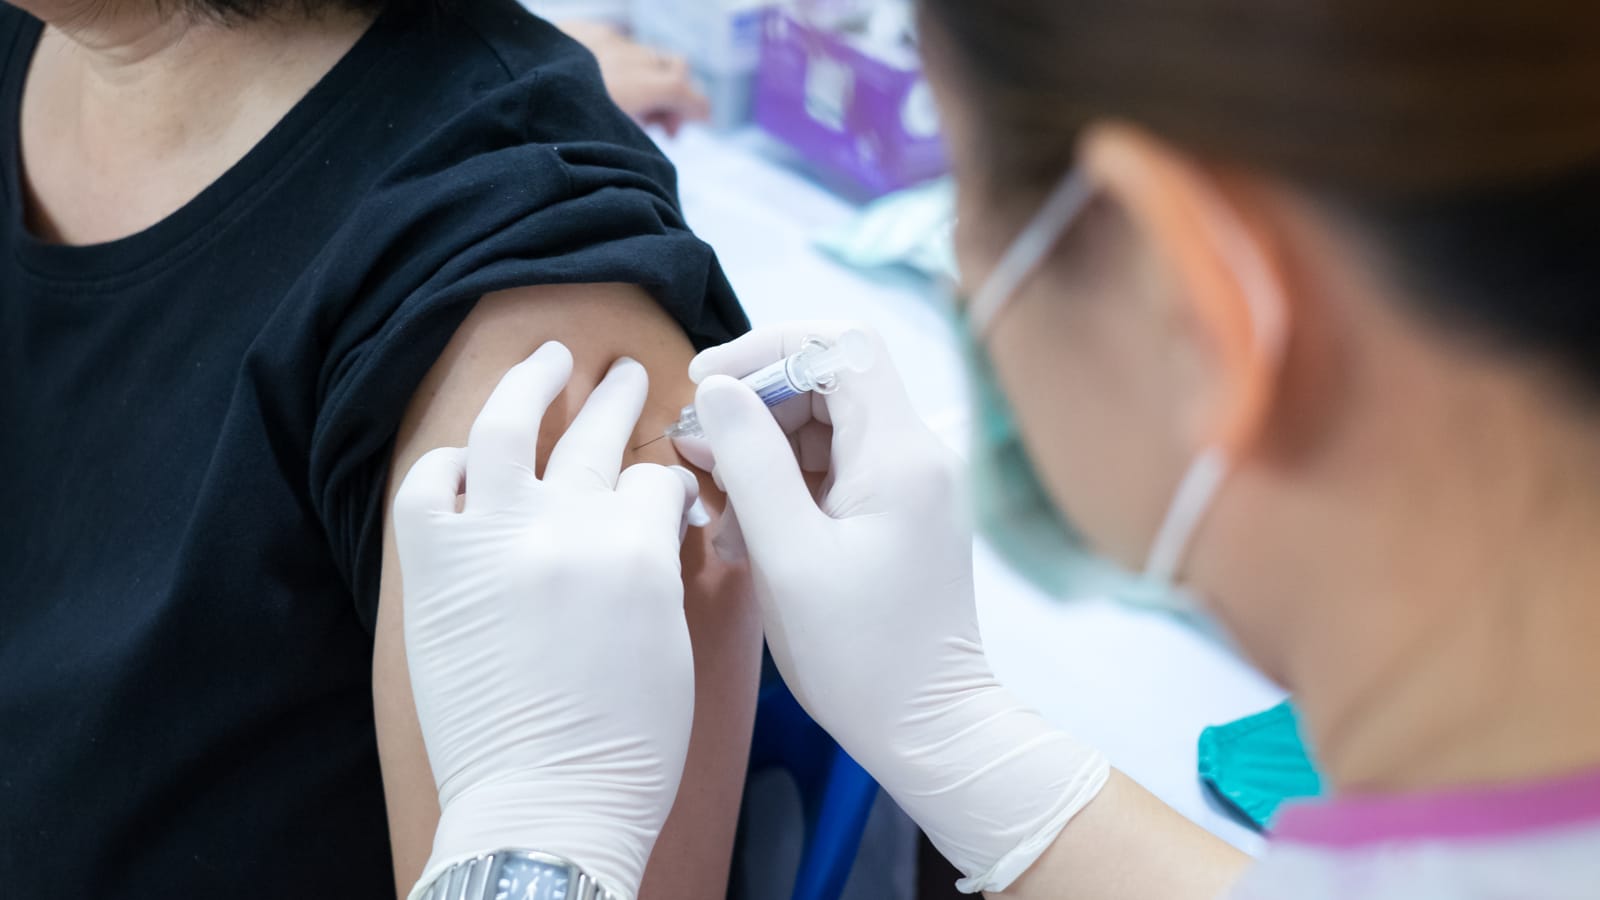 Woman receiving a flu shot in her arm